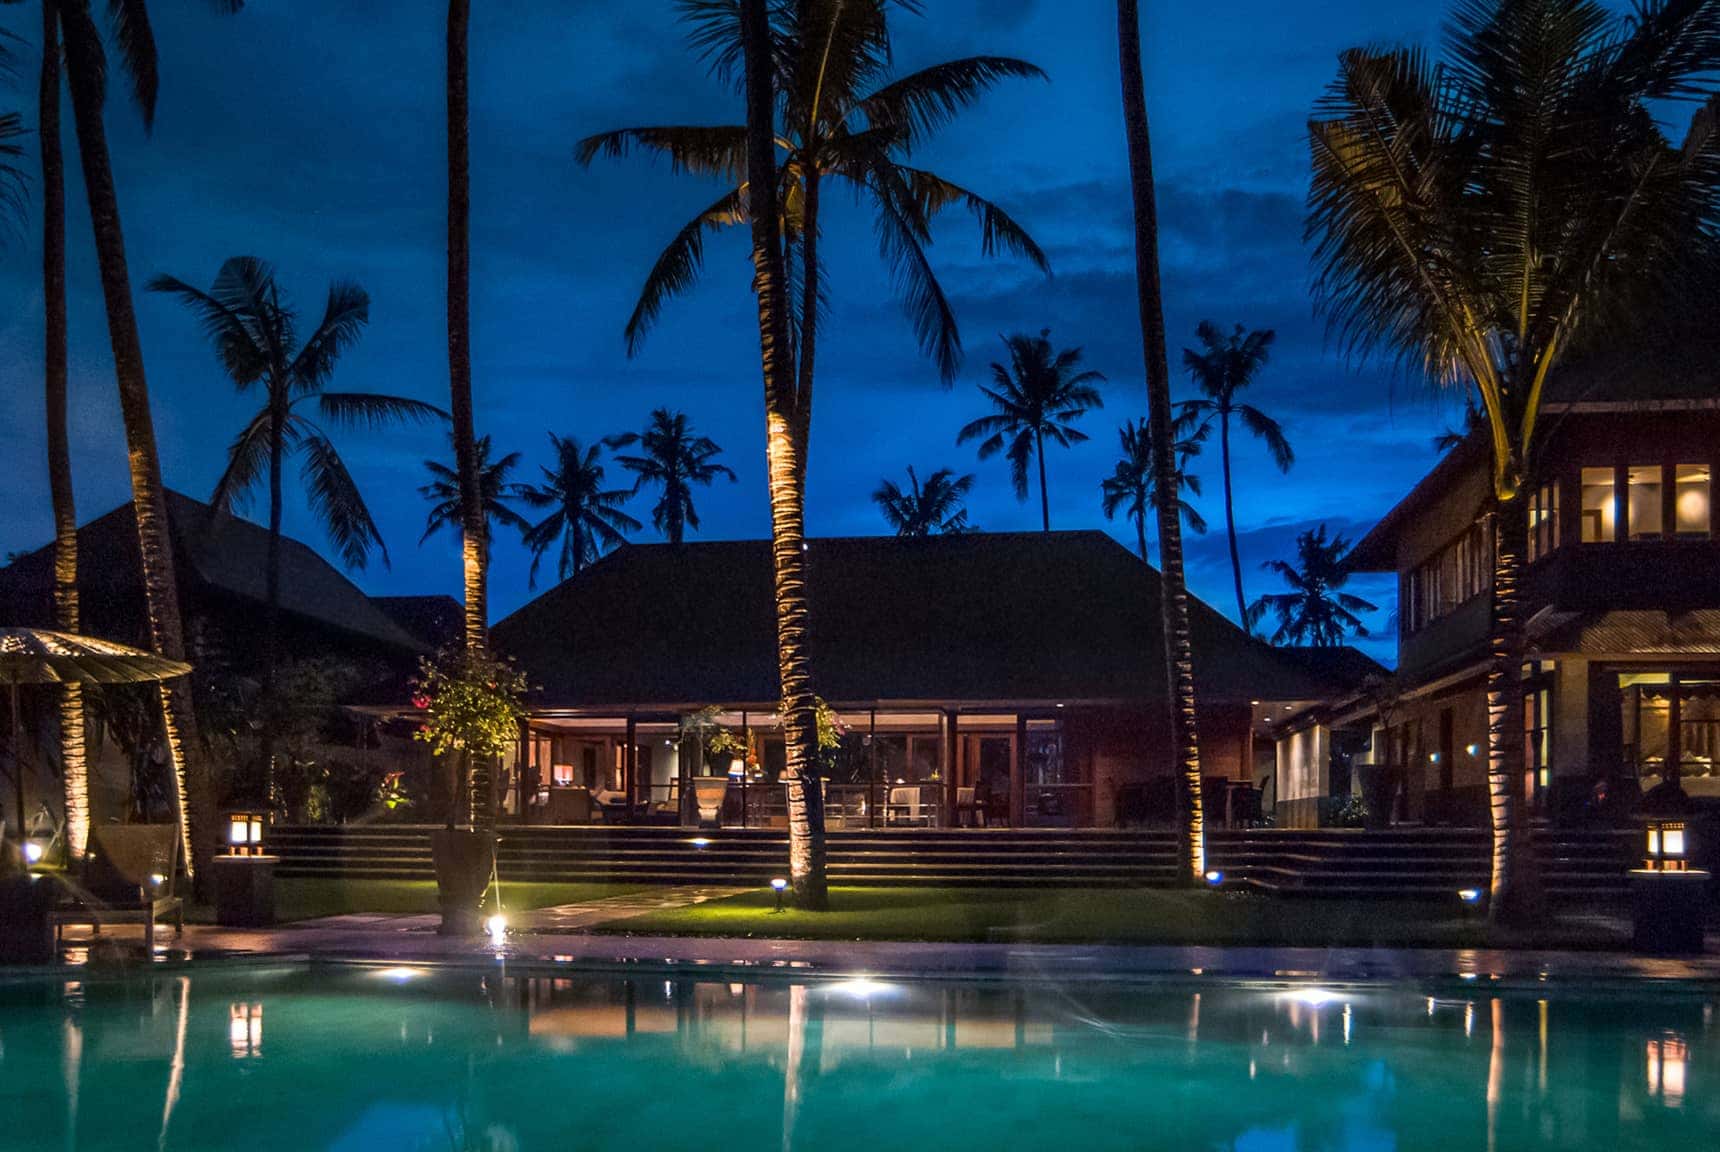 Villa Pushpapuri - Ketewel, Bali Indonesia (Bali villa photography by master photographer Rick Carmichael of LuxViz)